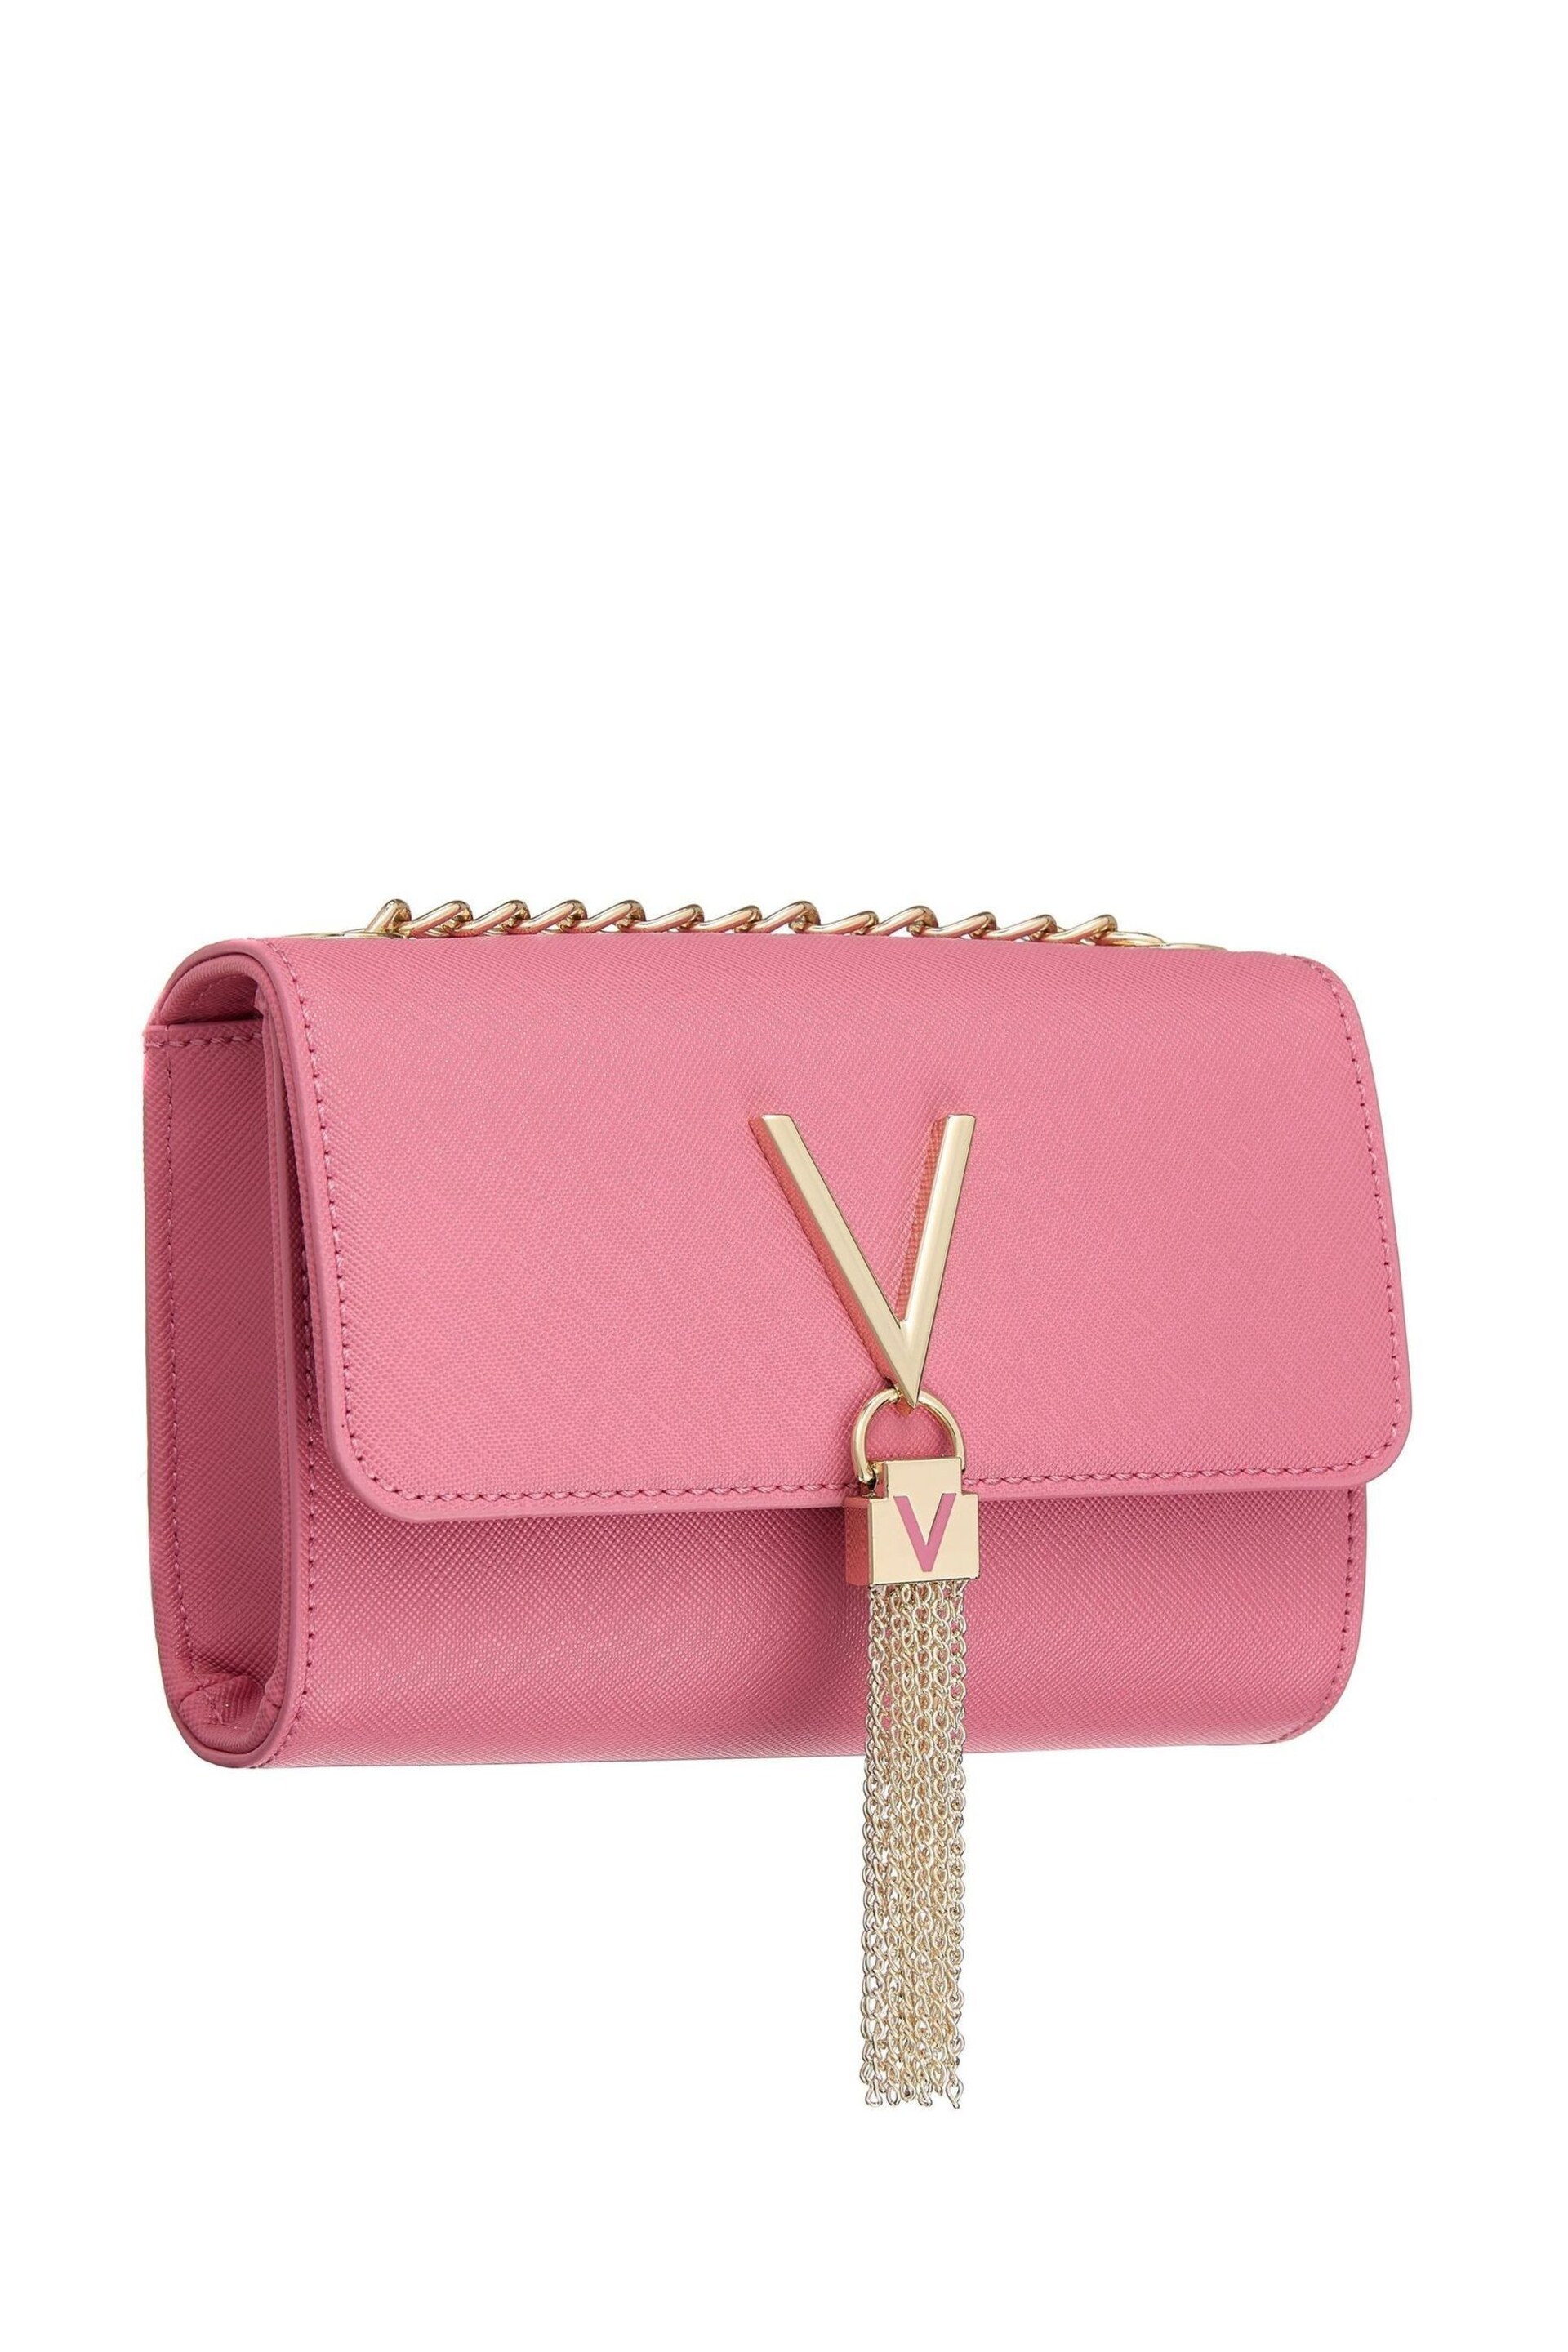 Valentino Bags Pink Divina Chain Crossbody Tassel Bag - Image 3 of 3